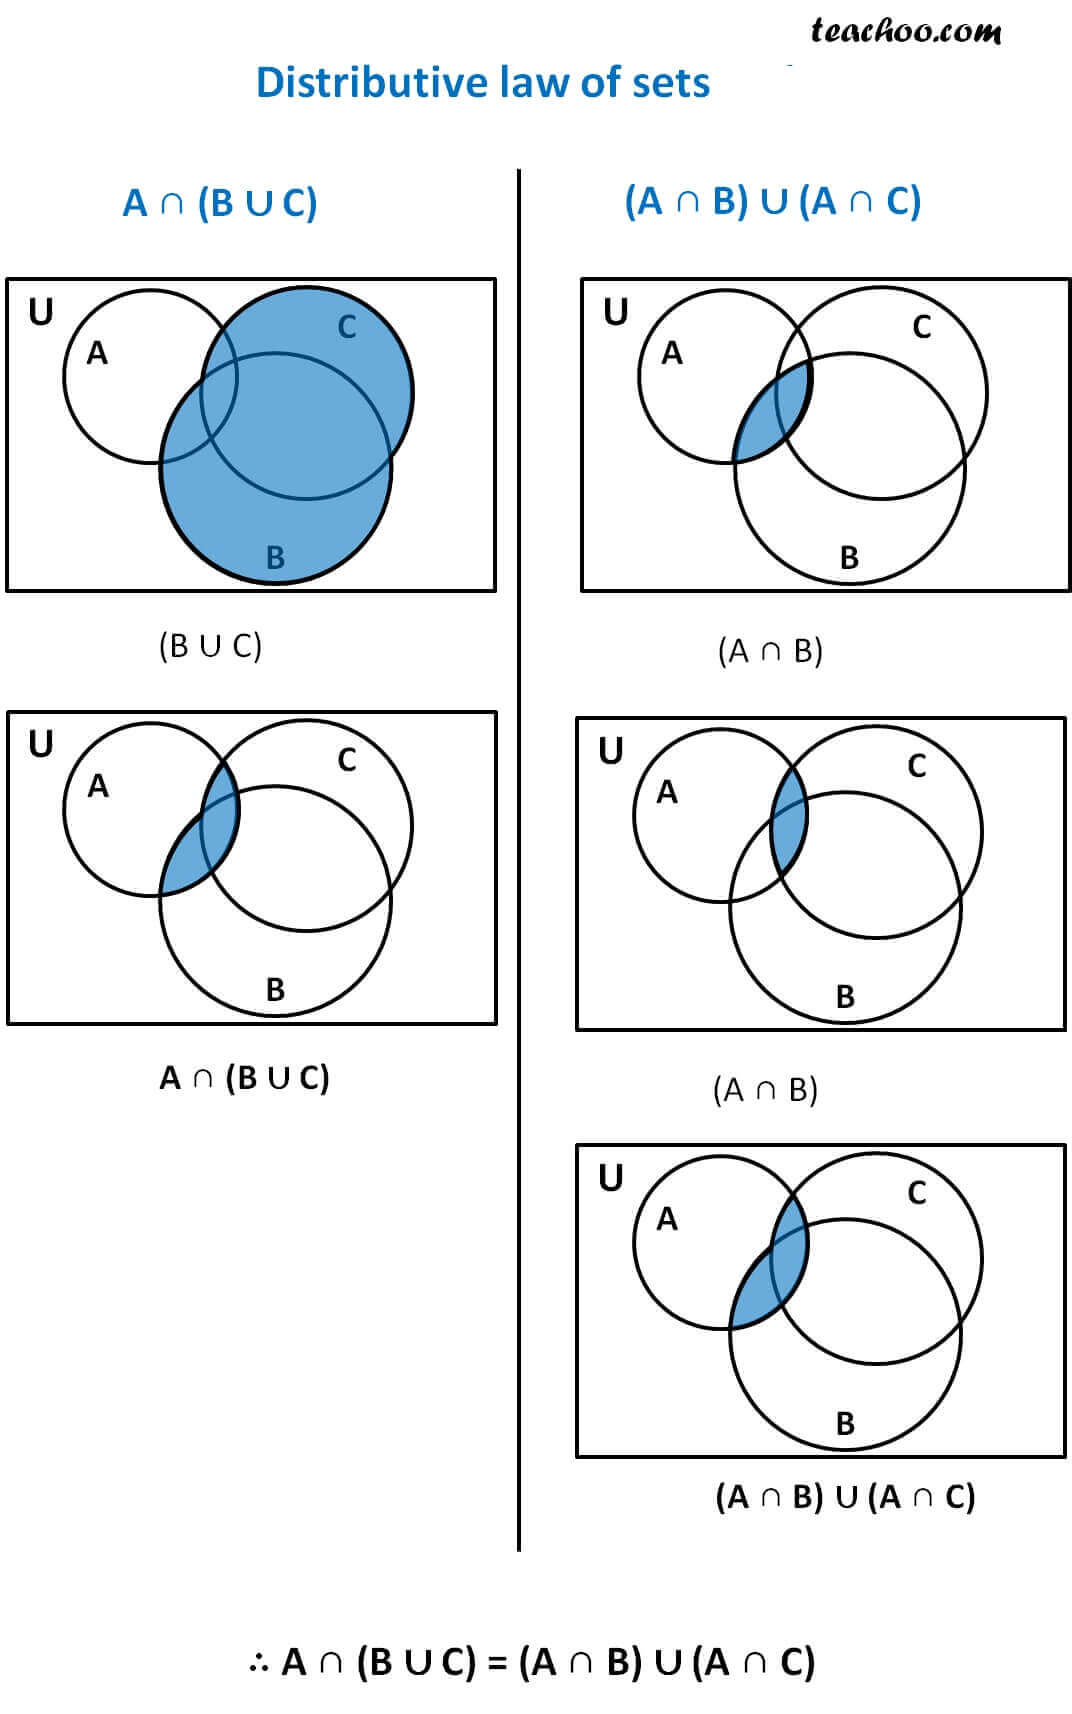 Venn Diagram Definition Proving Distributive Law Of Sets Venn Diagram Intersection Of Set